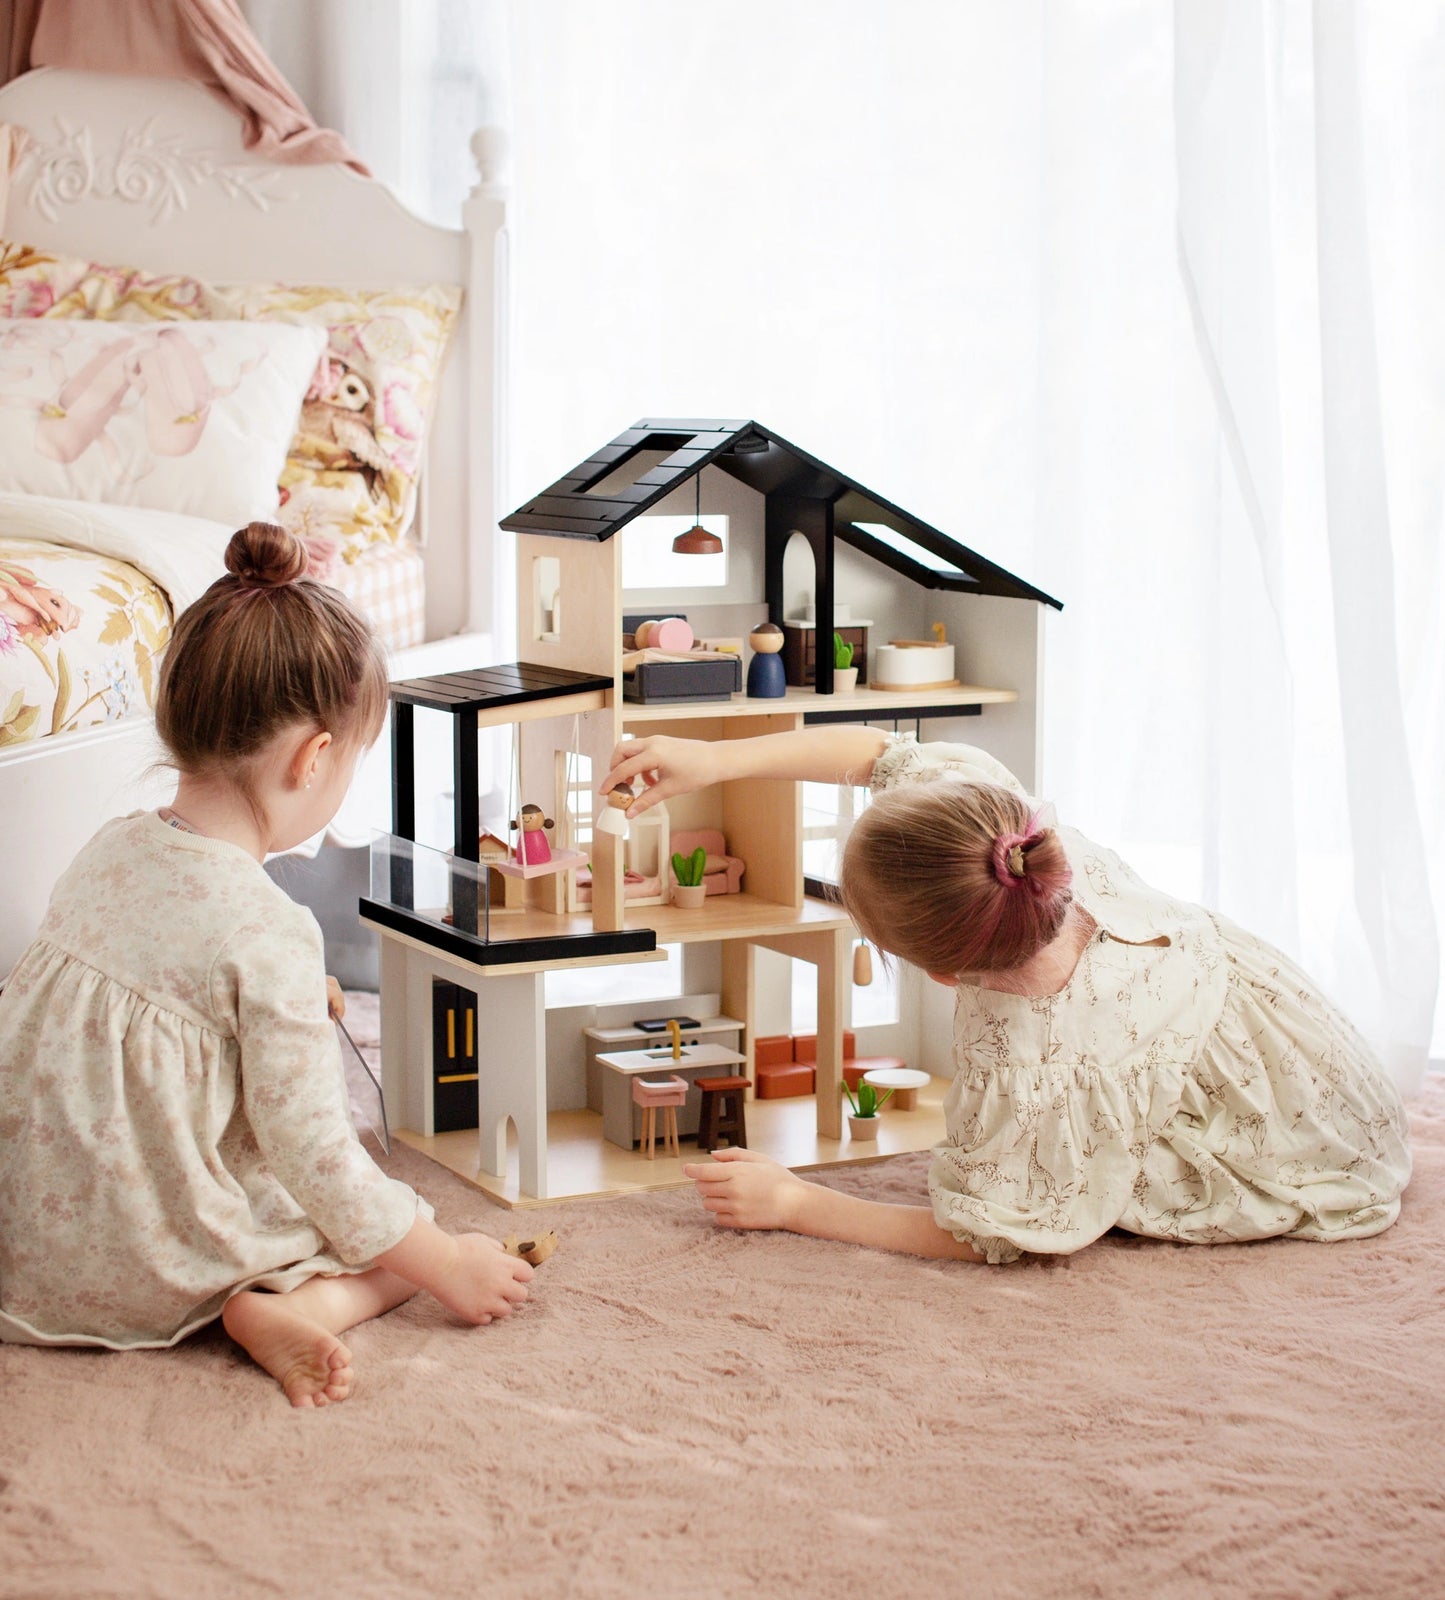 Tiny Land® Modern Family Dollhouse